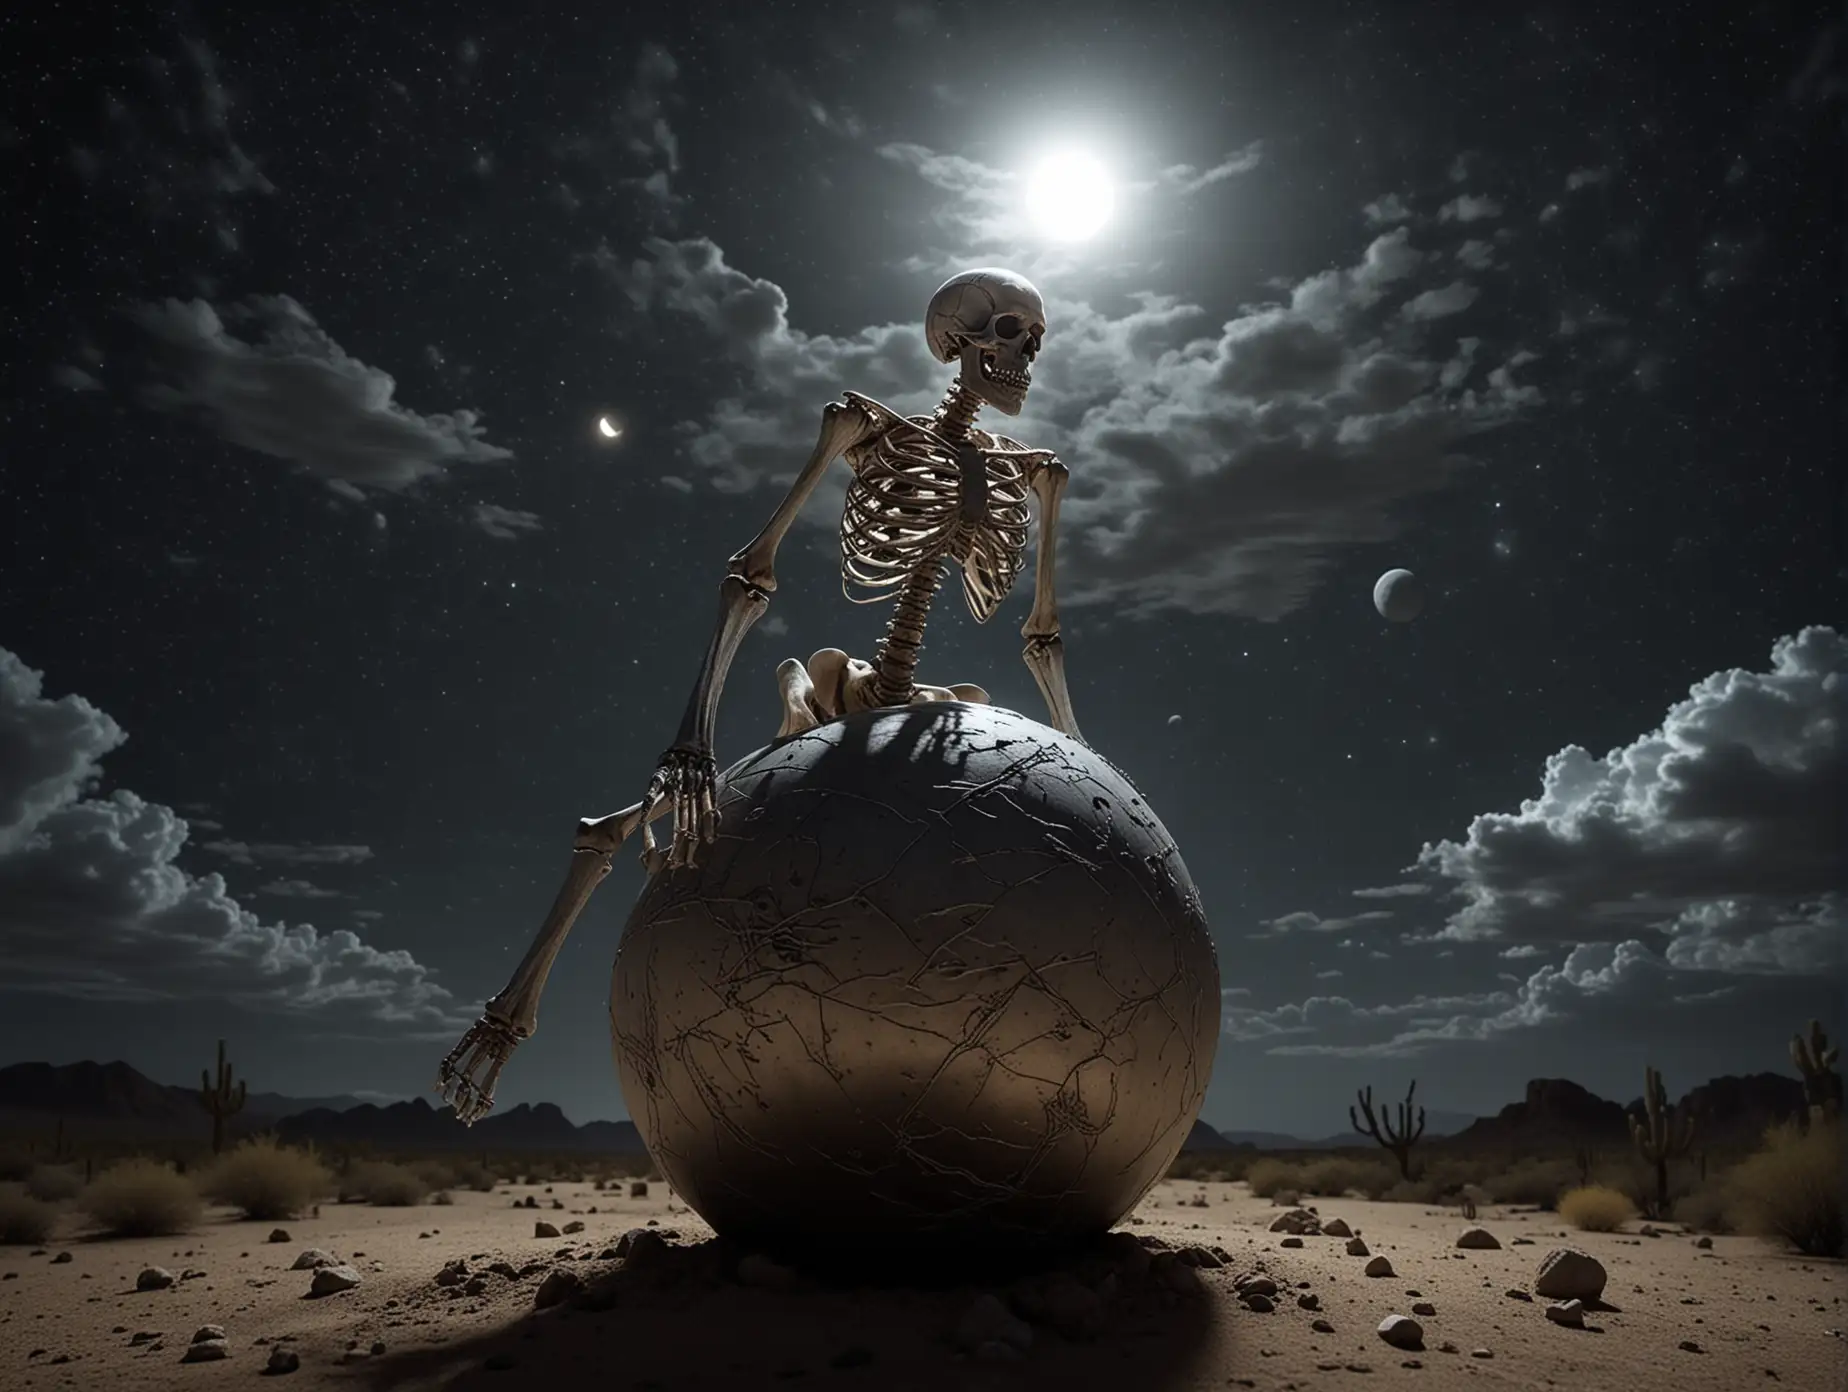 Ethereal Skeleton Soaring on Silver Orb in Sonoran Desert Night